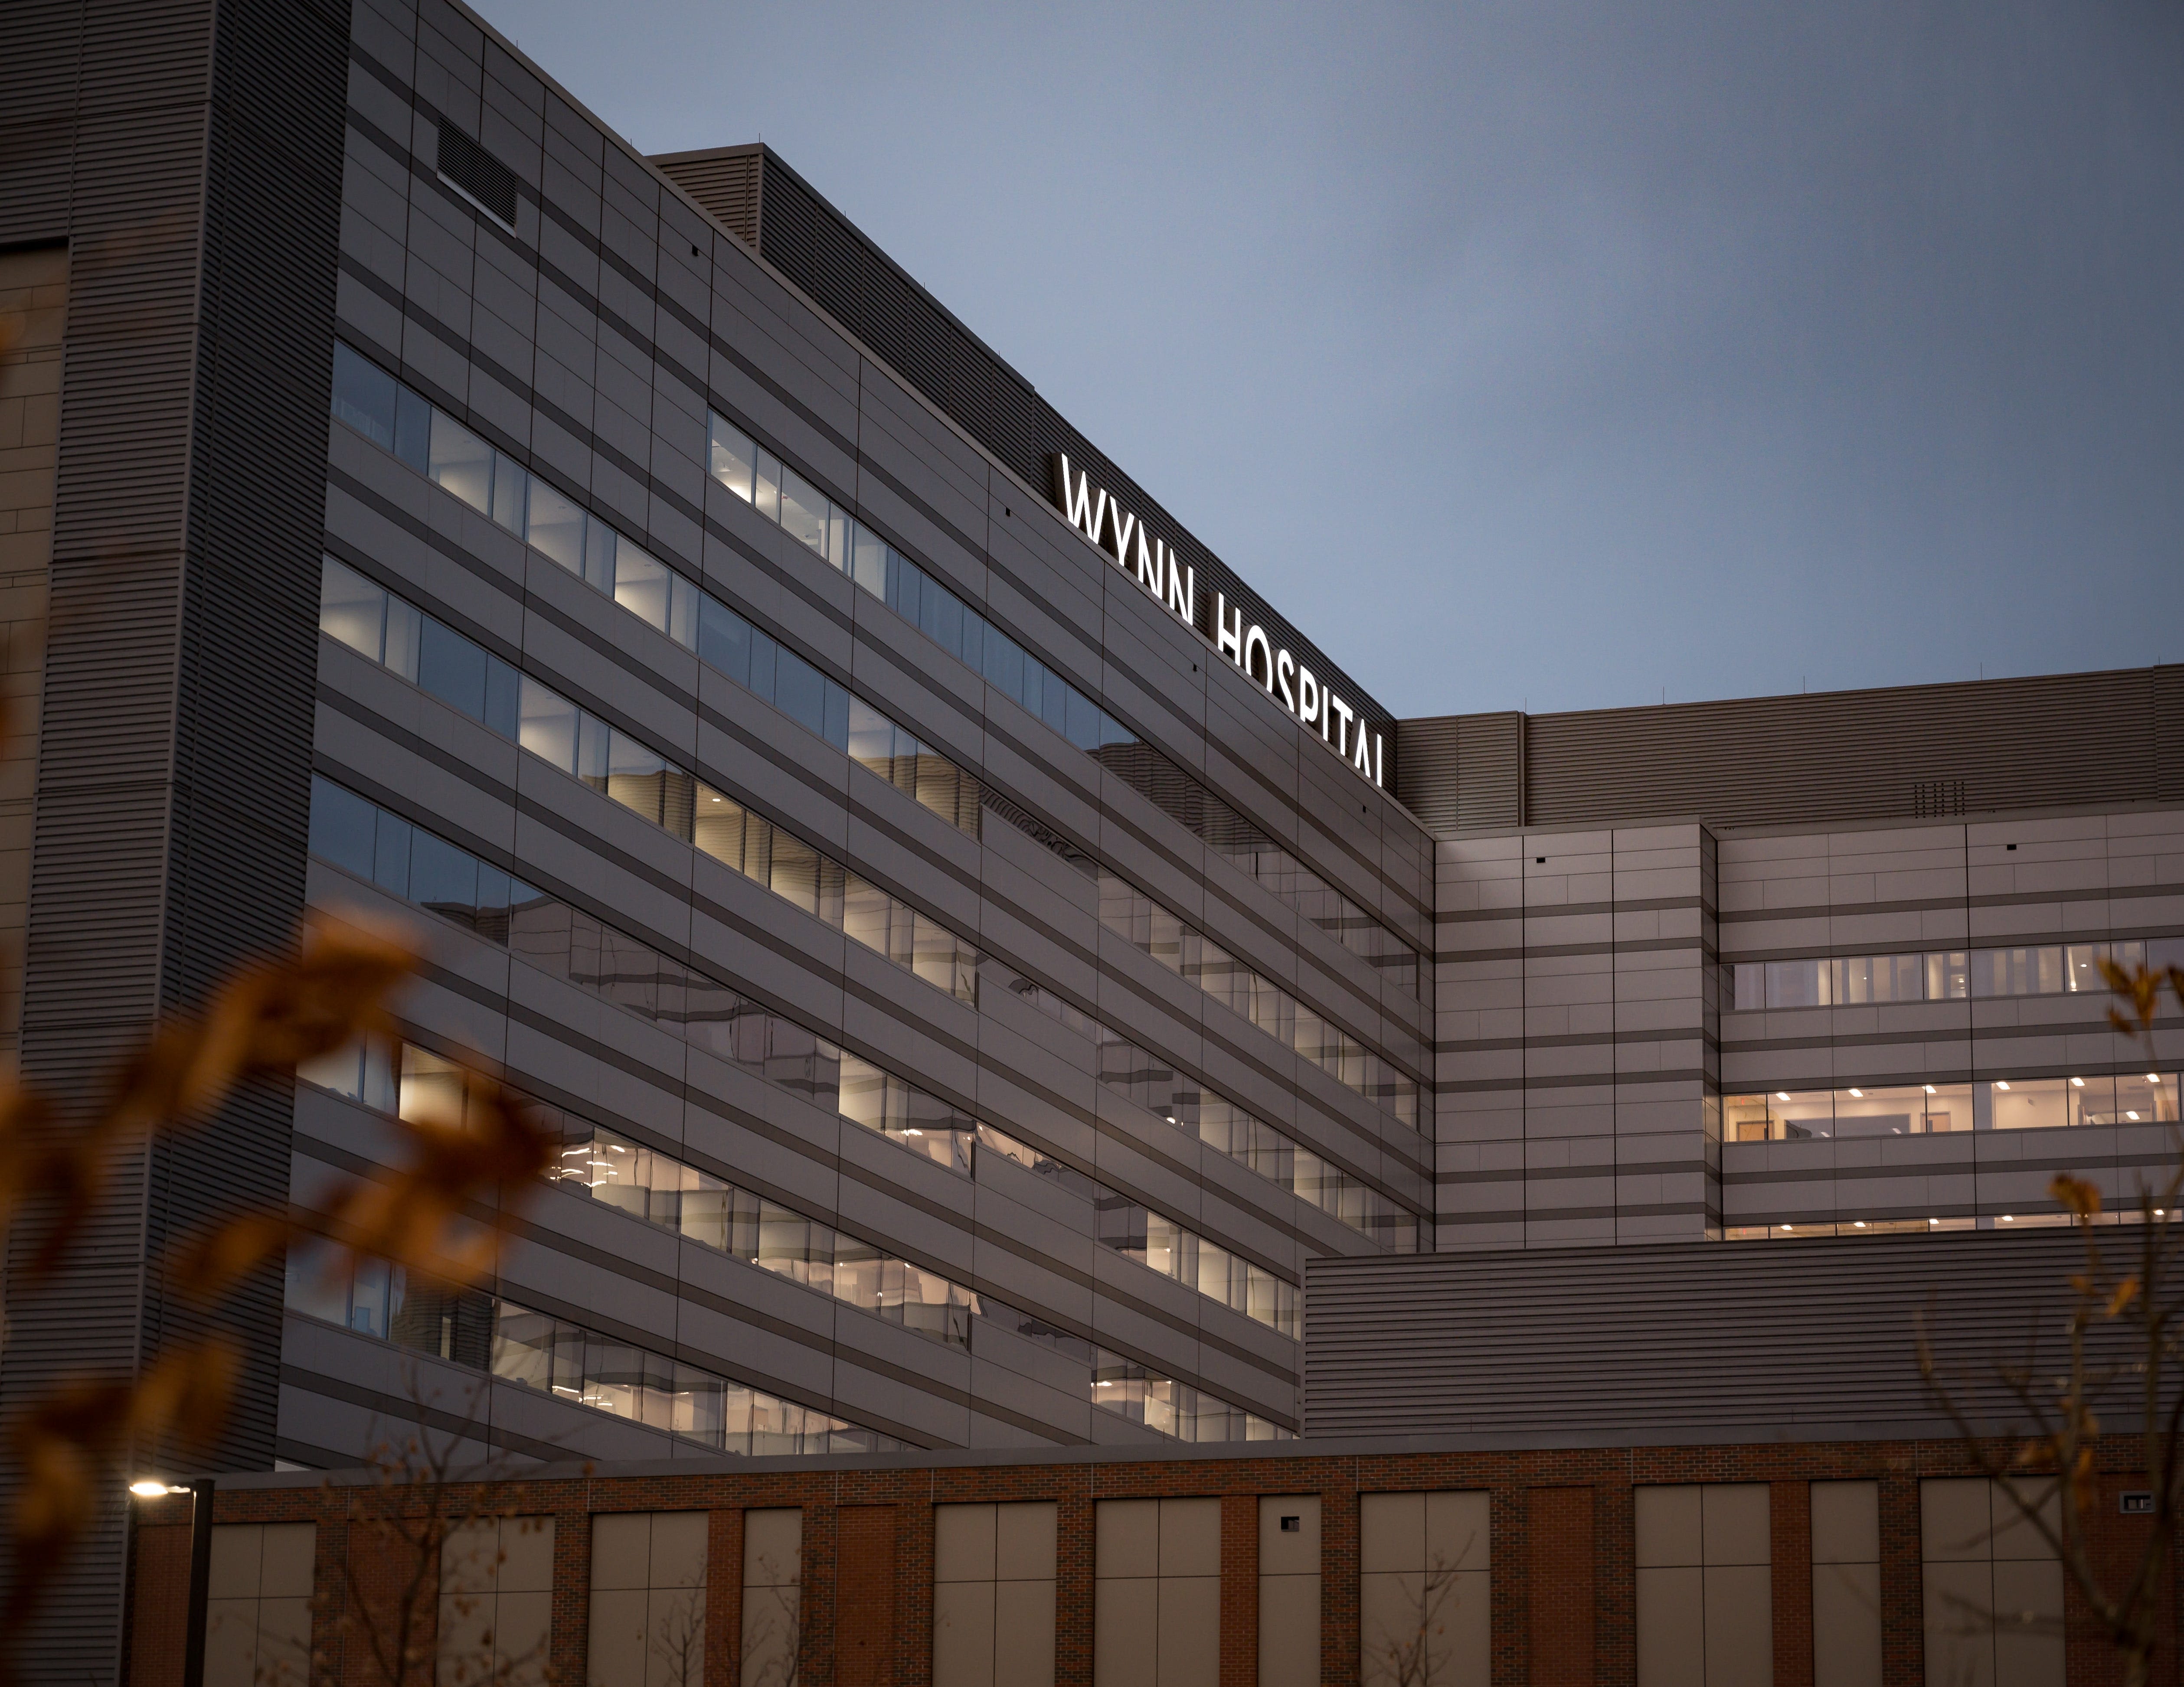 Why did Wynn Hospital pause open-heart surgeries?